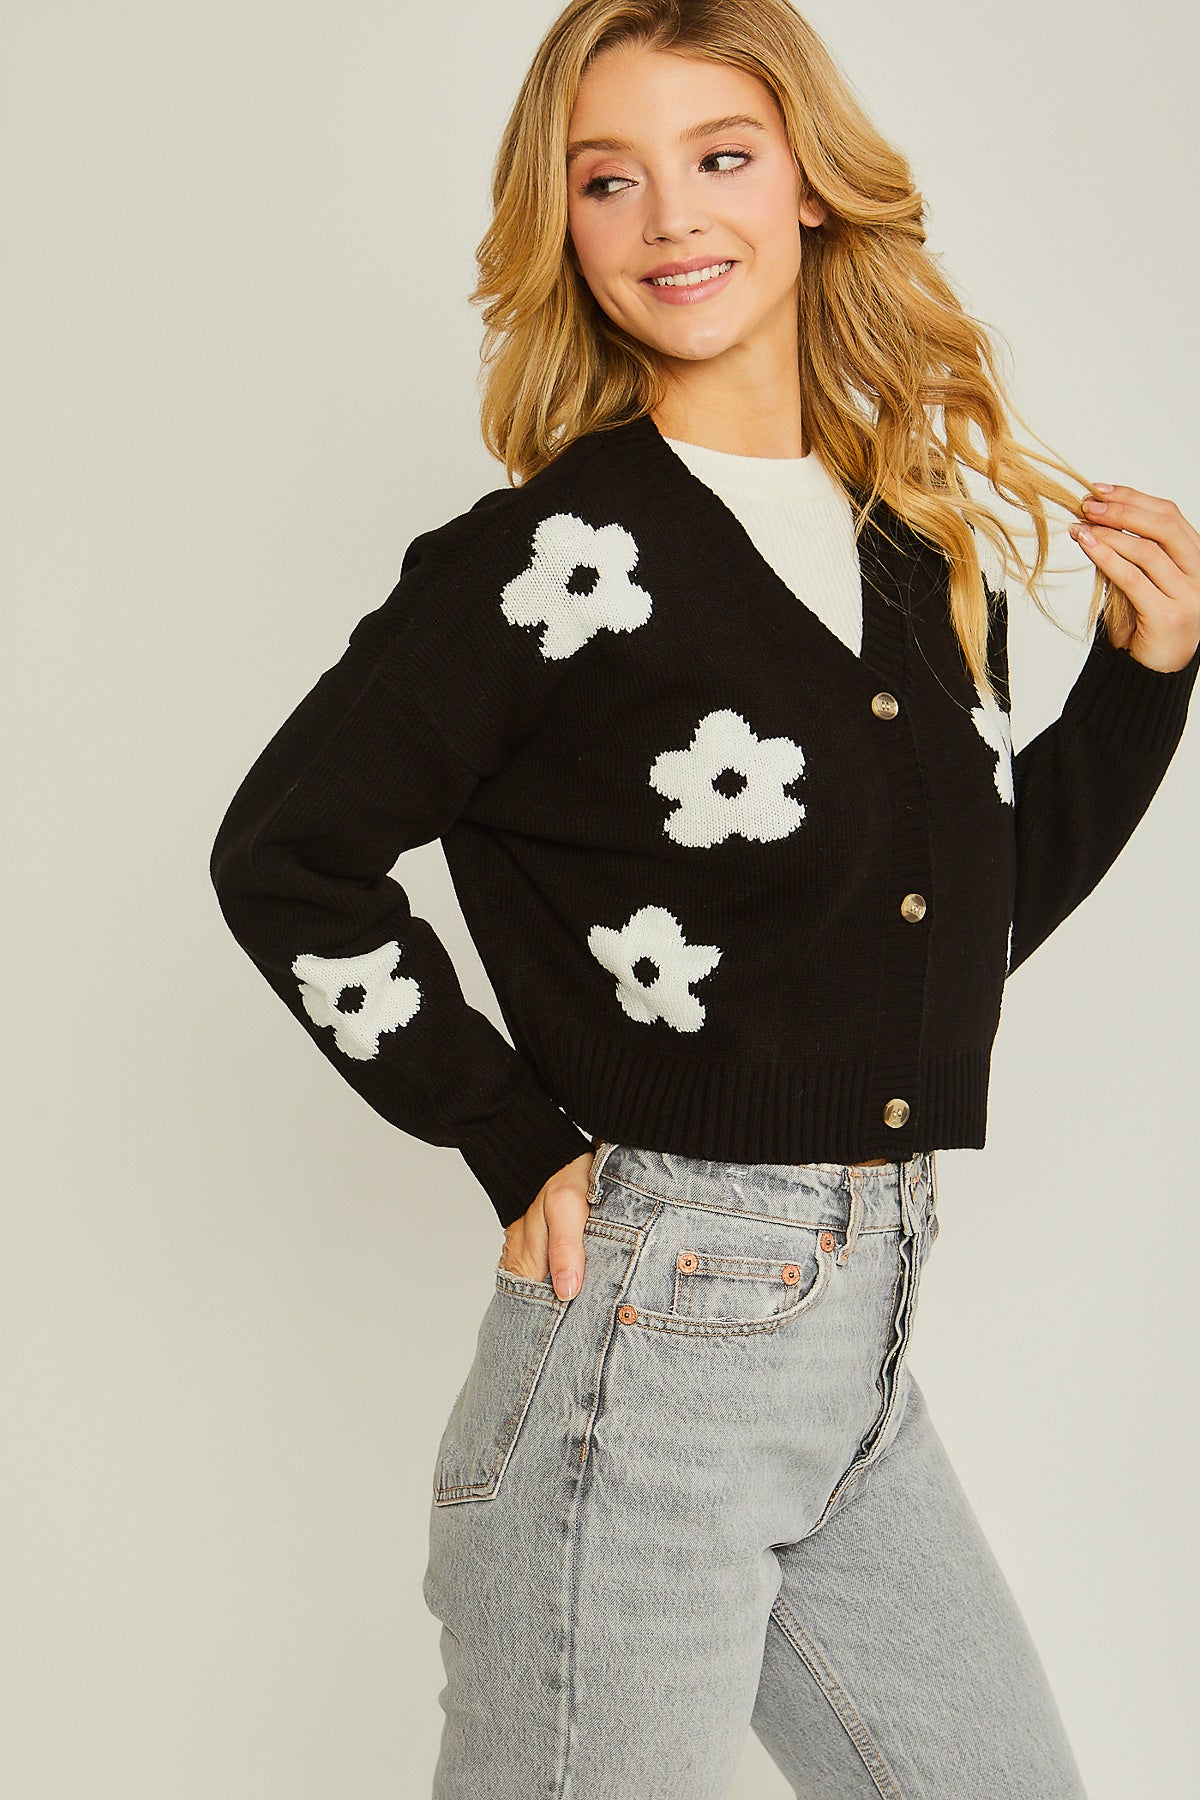 Retro Floral Sweater Cardigan